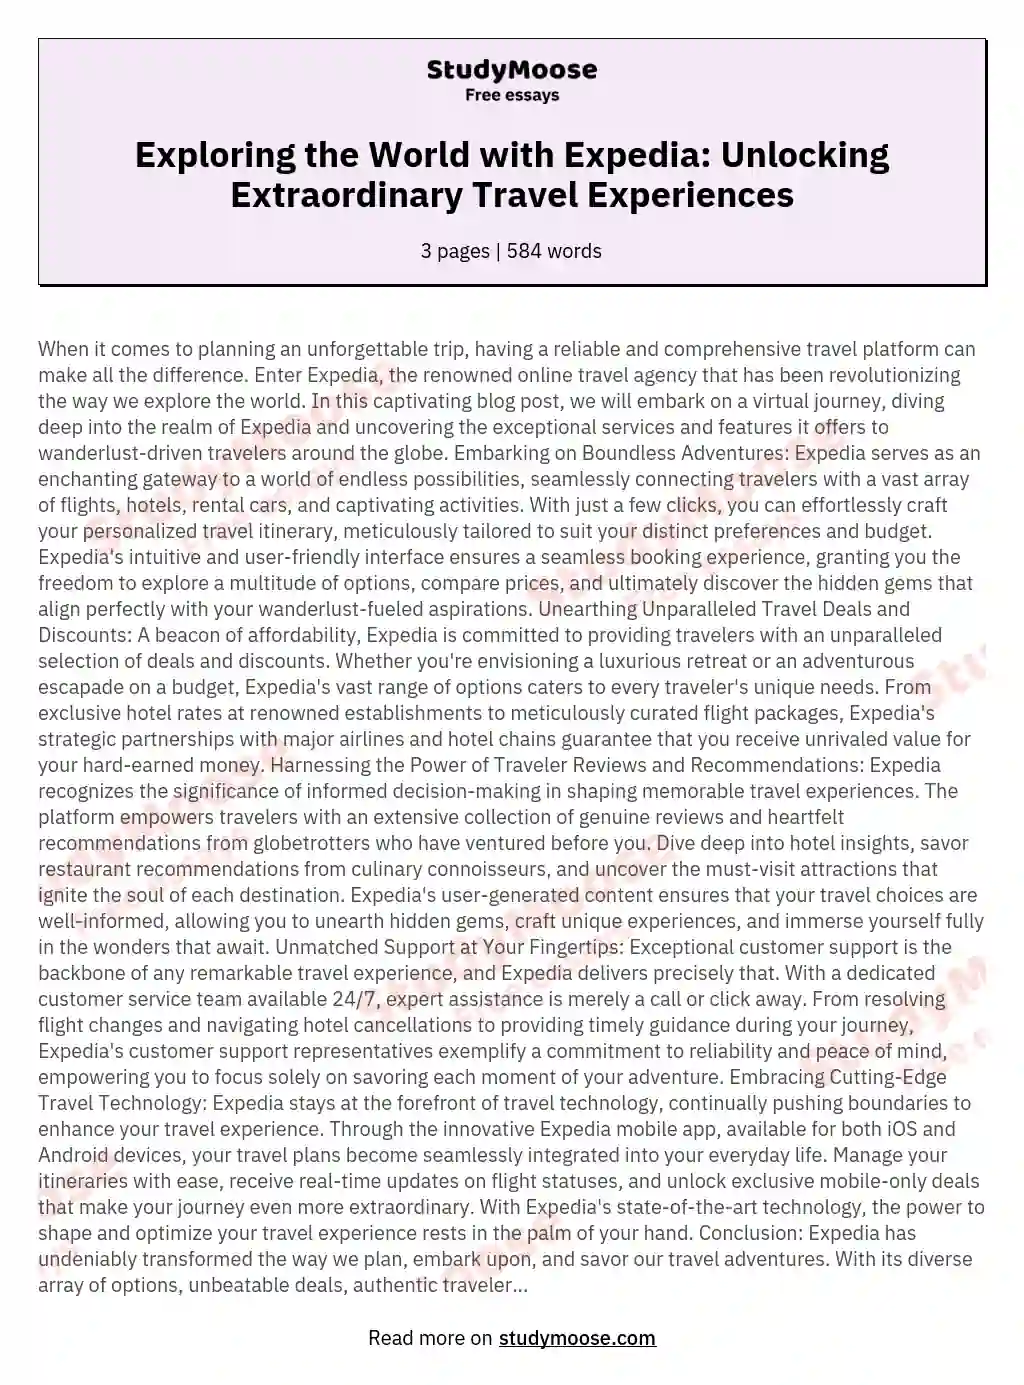 Exploring the World with Expedia: Unlocking Extraordinary Travel Experiences essay